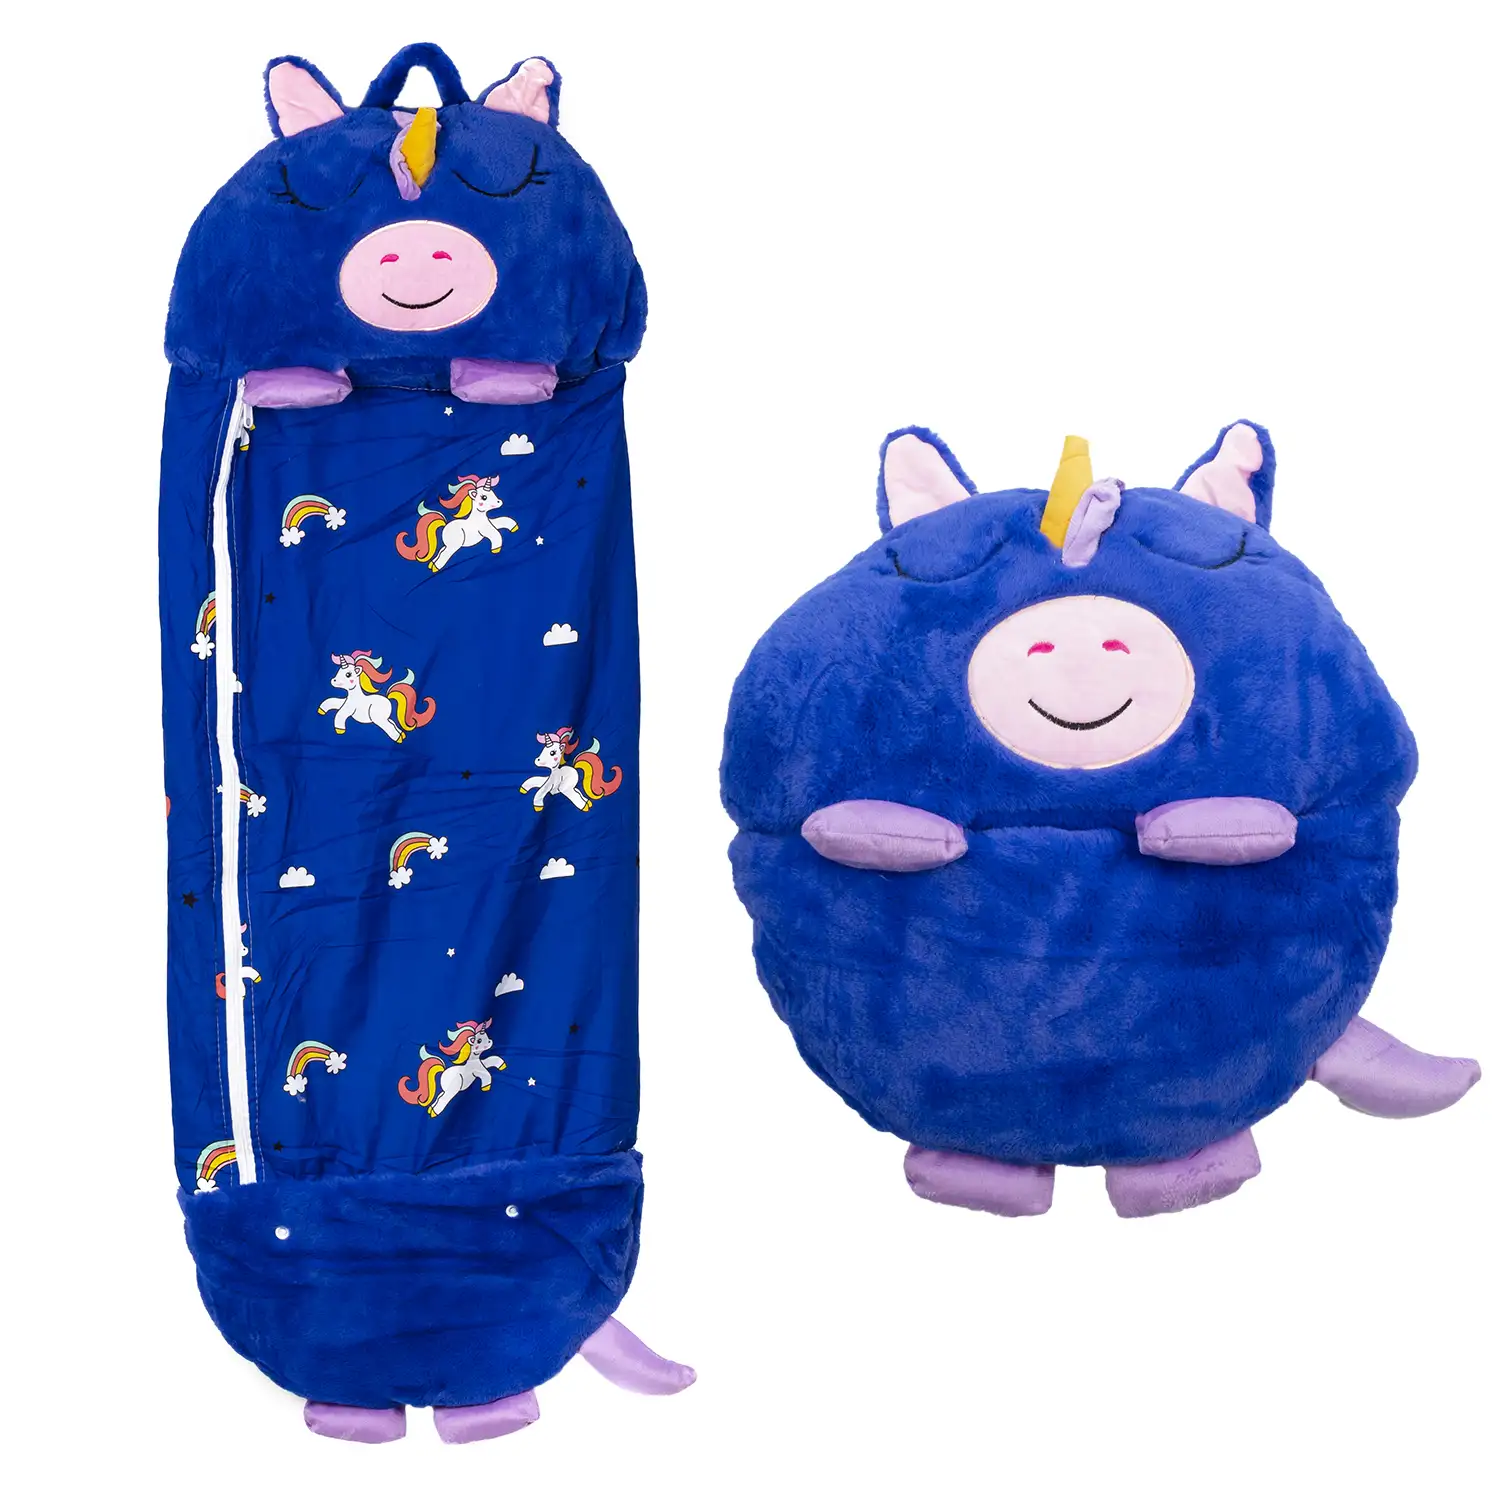 Saco de dormir convertible en almohada, para niños, Cerdicornio Azul Eléctrico. Tacto peluche. Pequeño / S: 128x45cm.